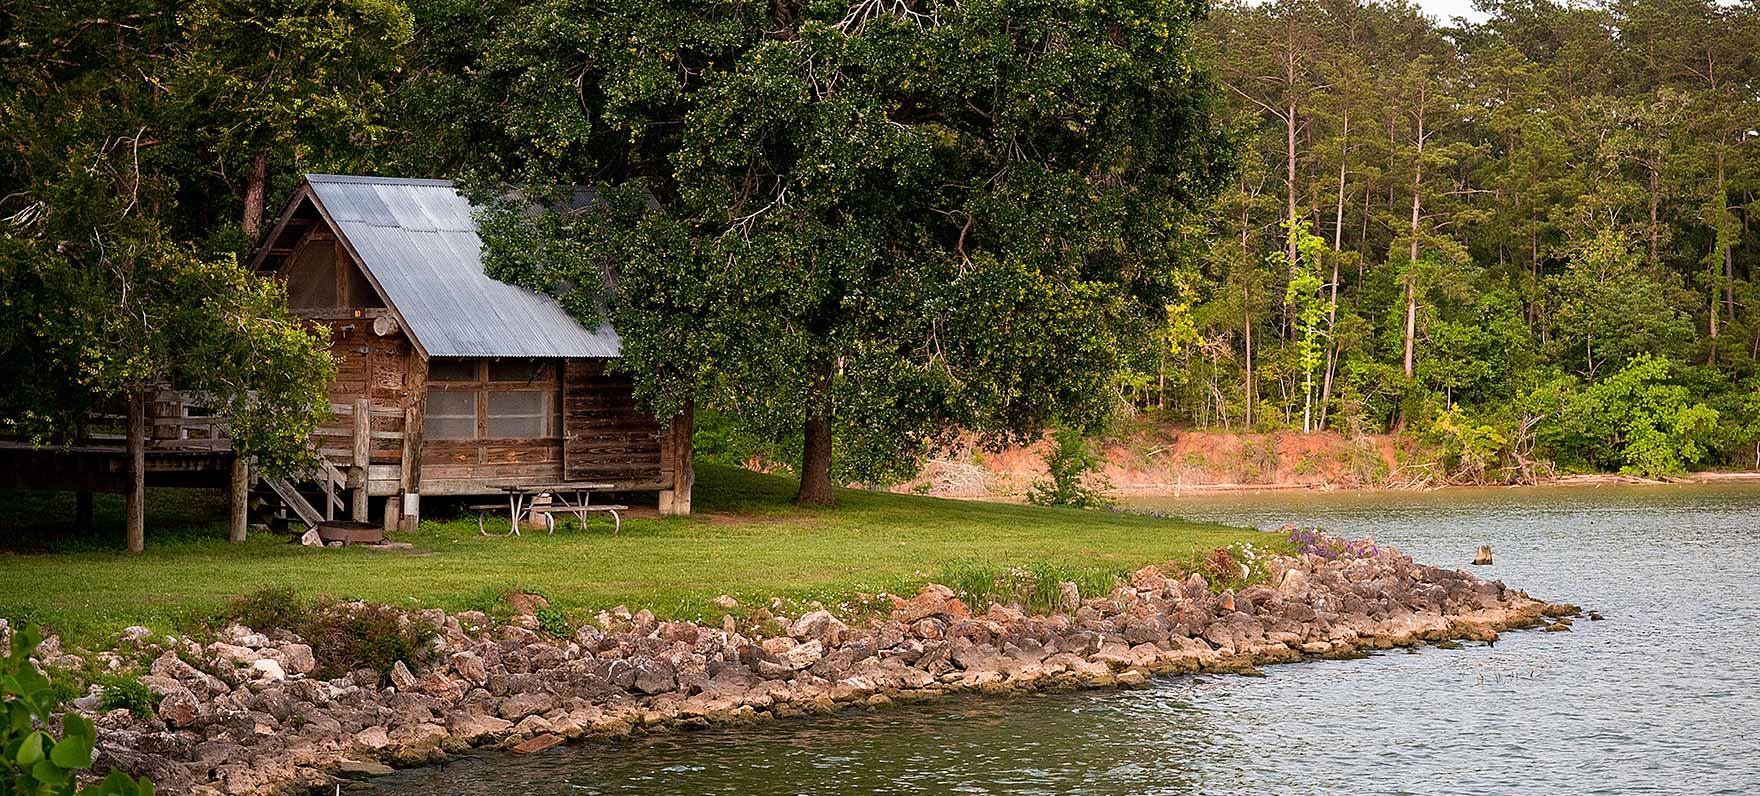 Lake Livingston Lake House Vacation Rentals - Texas, United